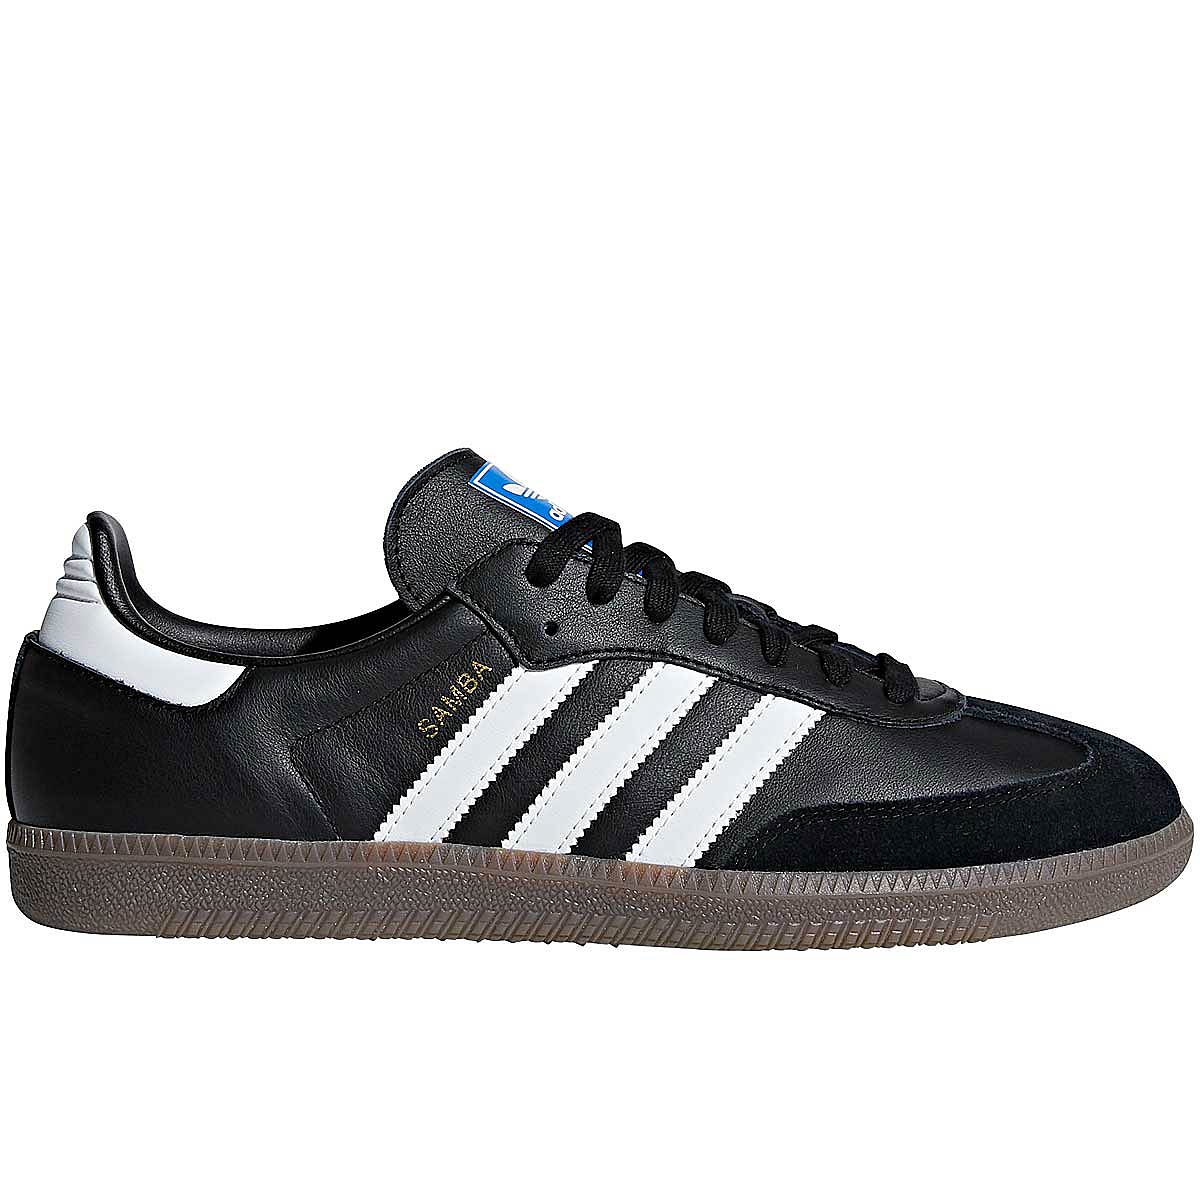 Image of Adidas Samba Og, Black/white/brown